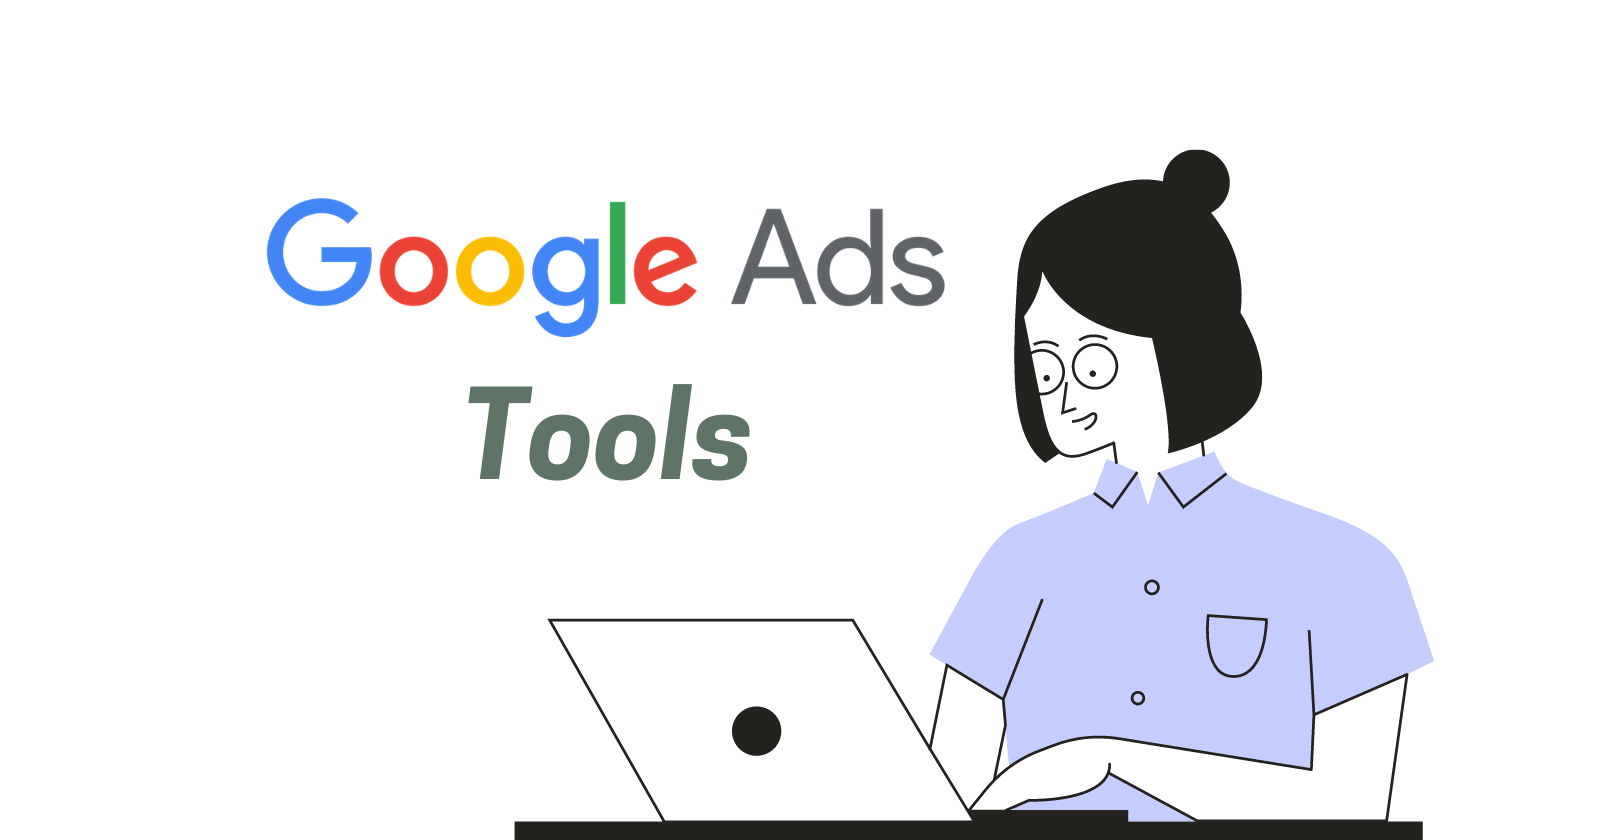 Ads tools